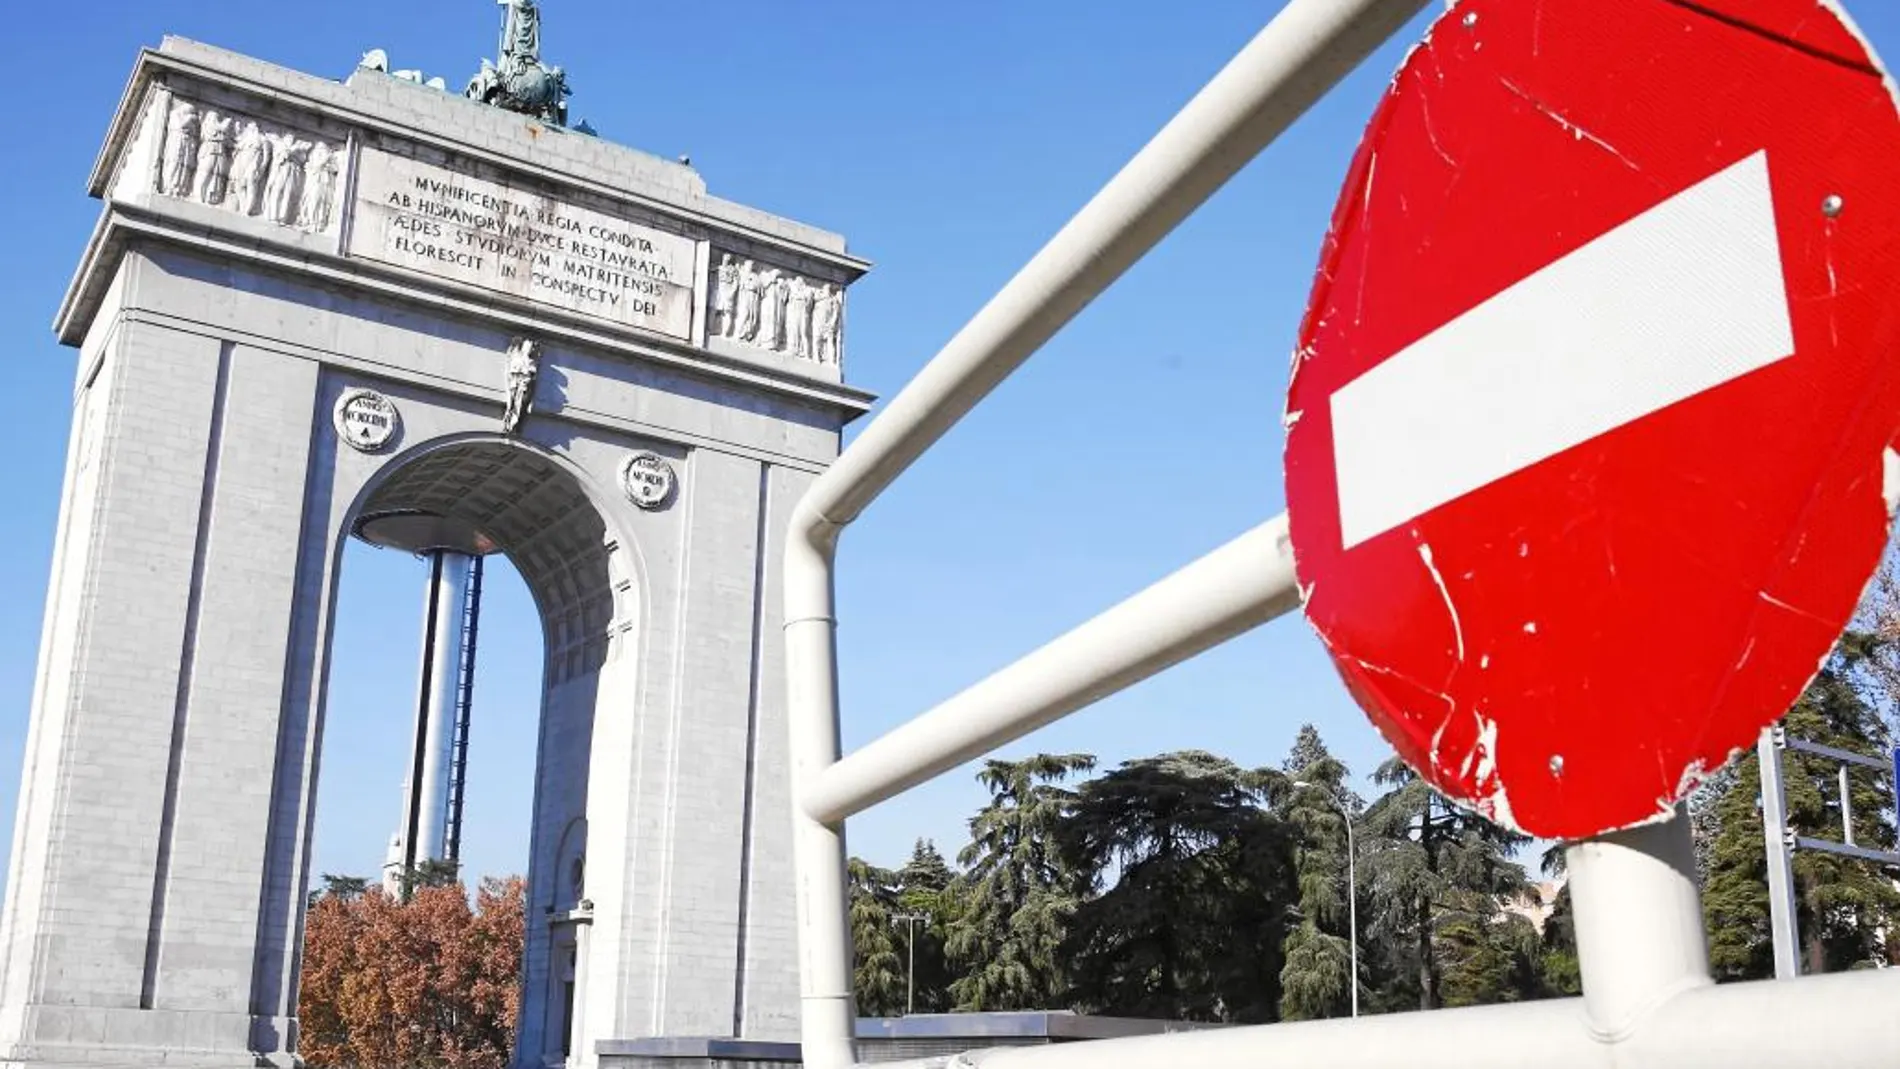 El Arco de la Victoria de Moncloa rinde homenaje a la victoria del bando nacional